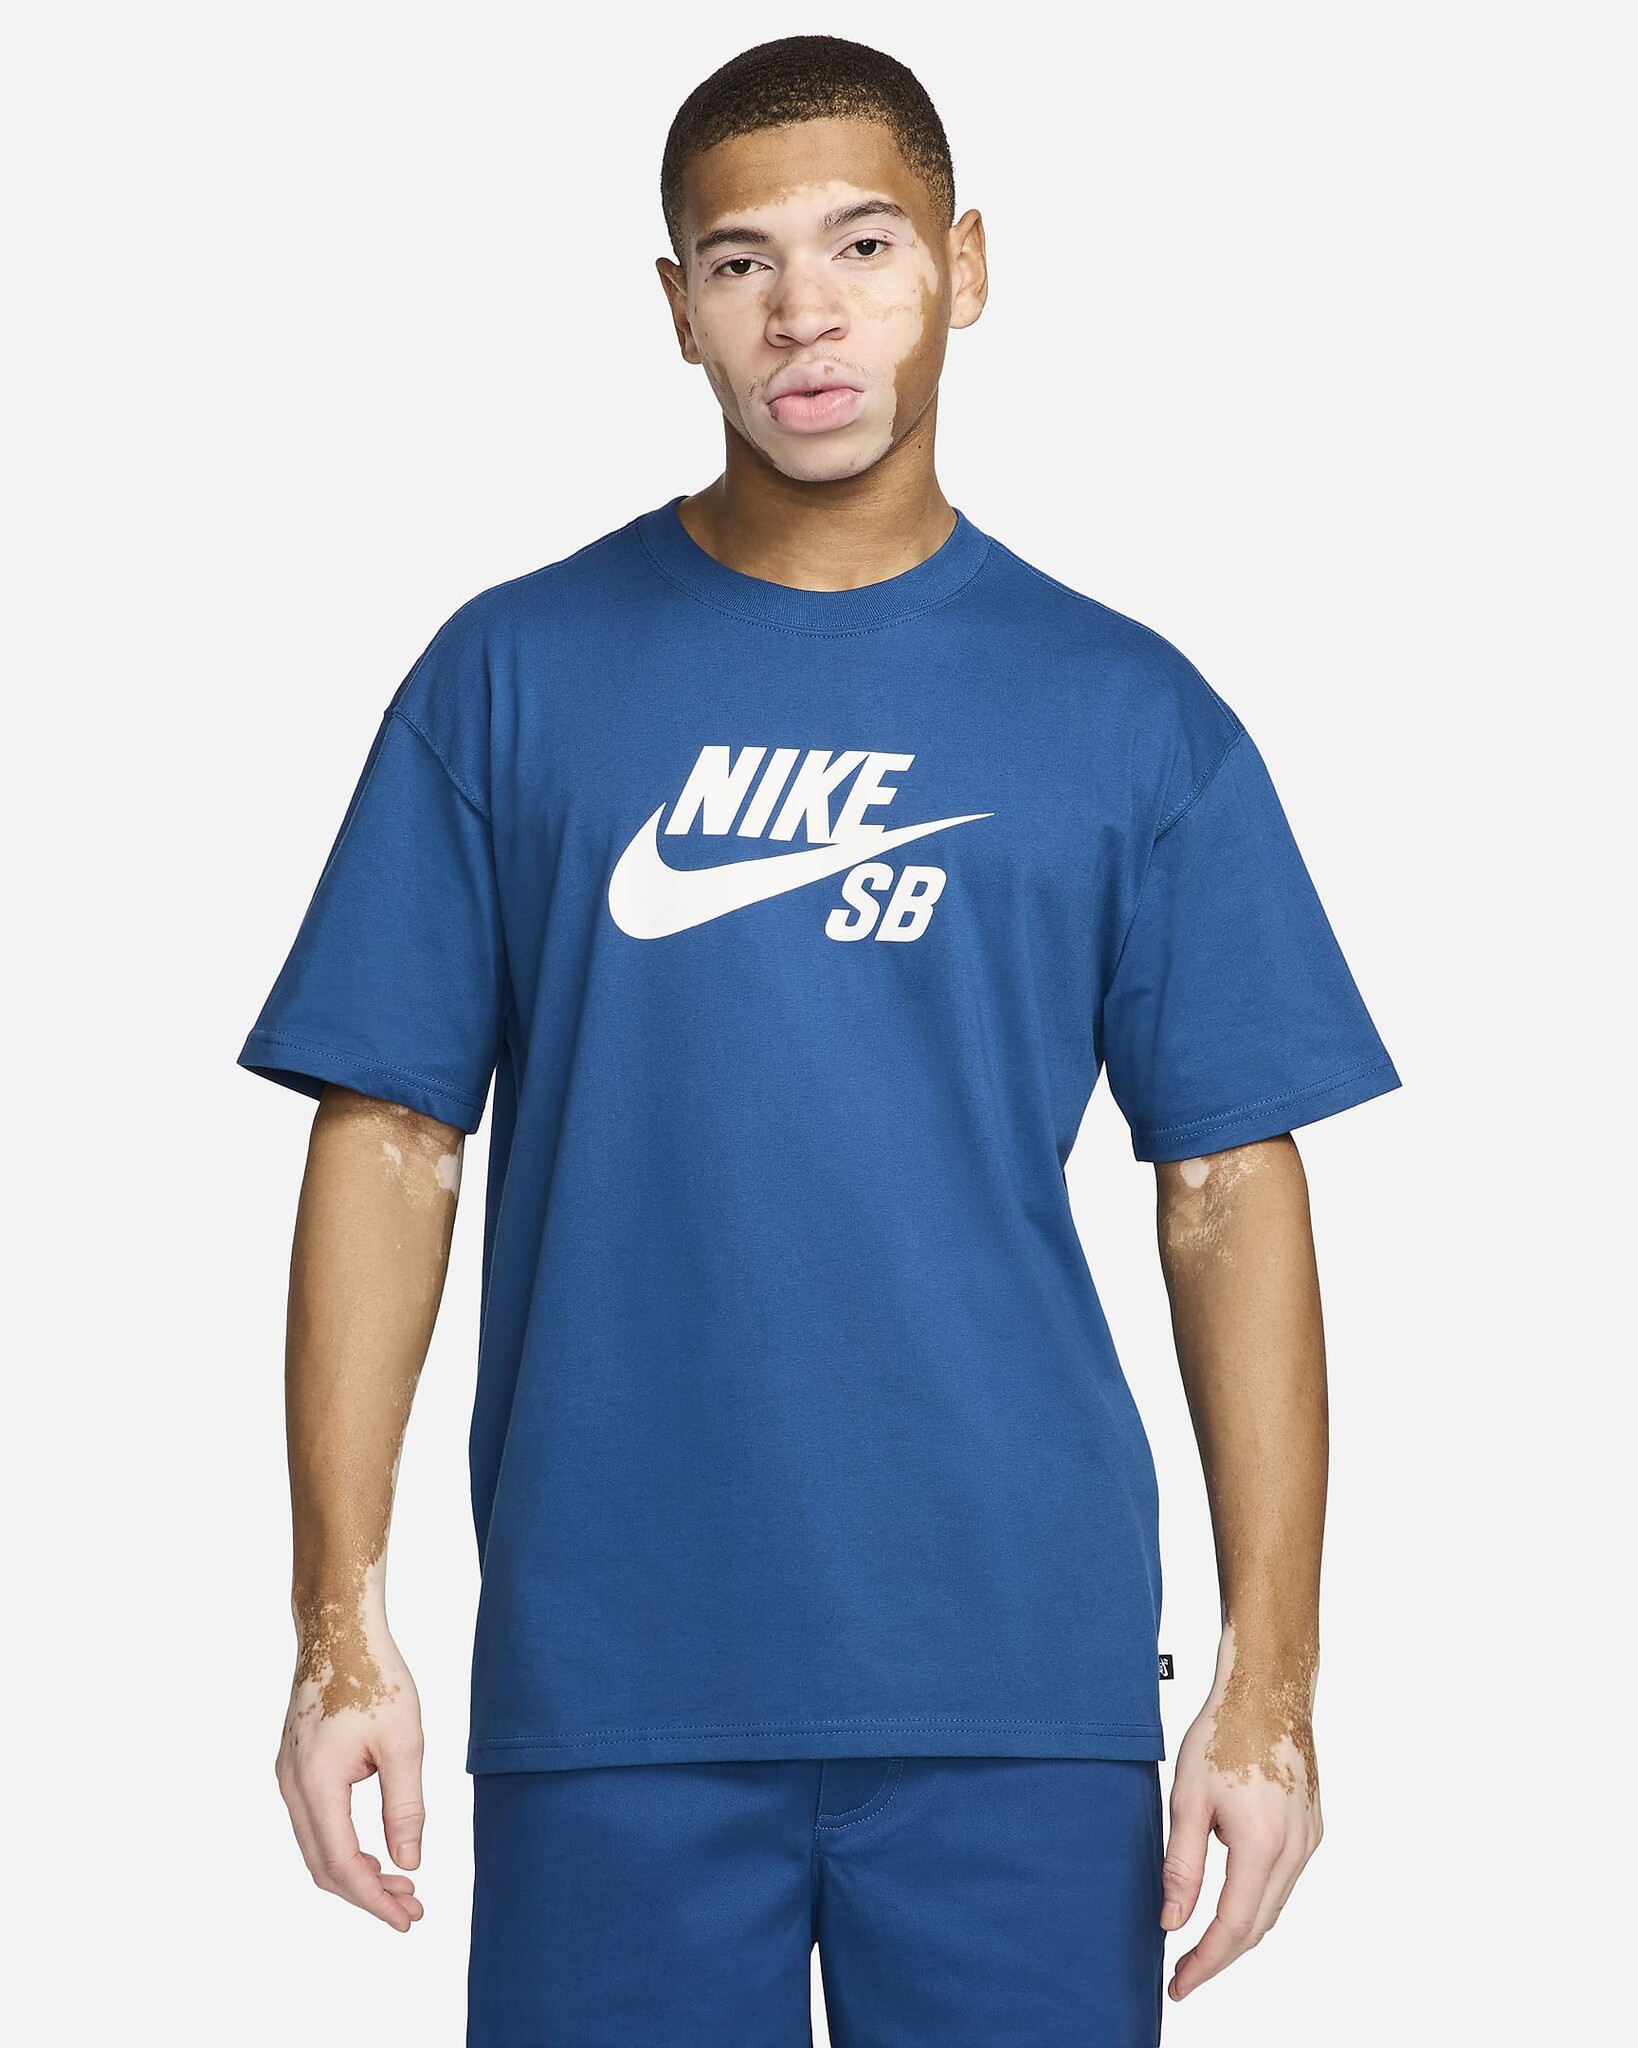 Nike SB SB LOGO COURT BLUE